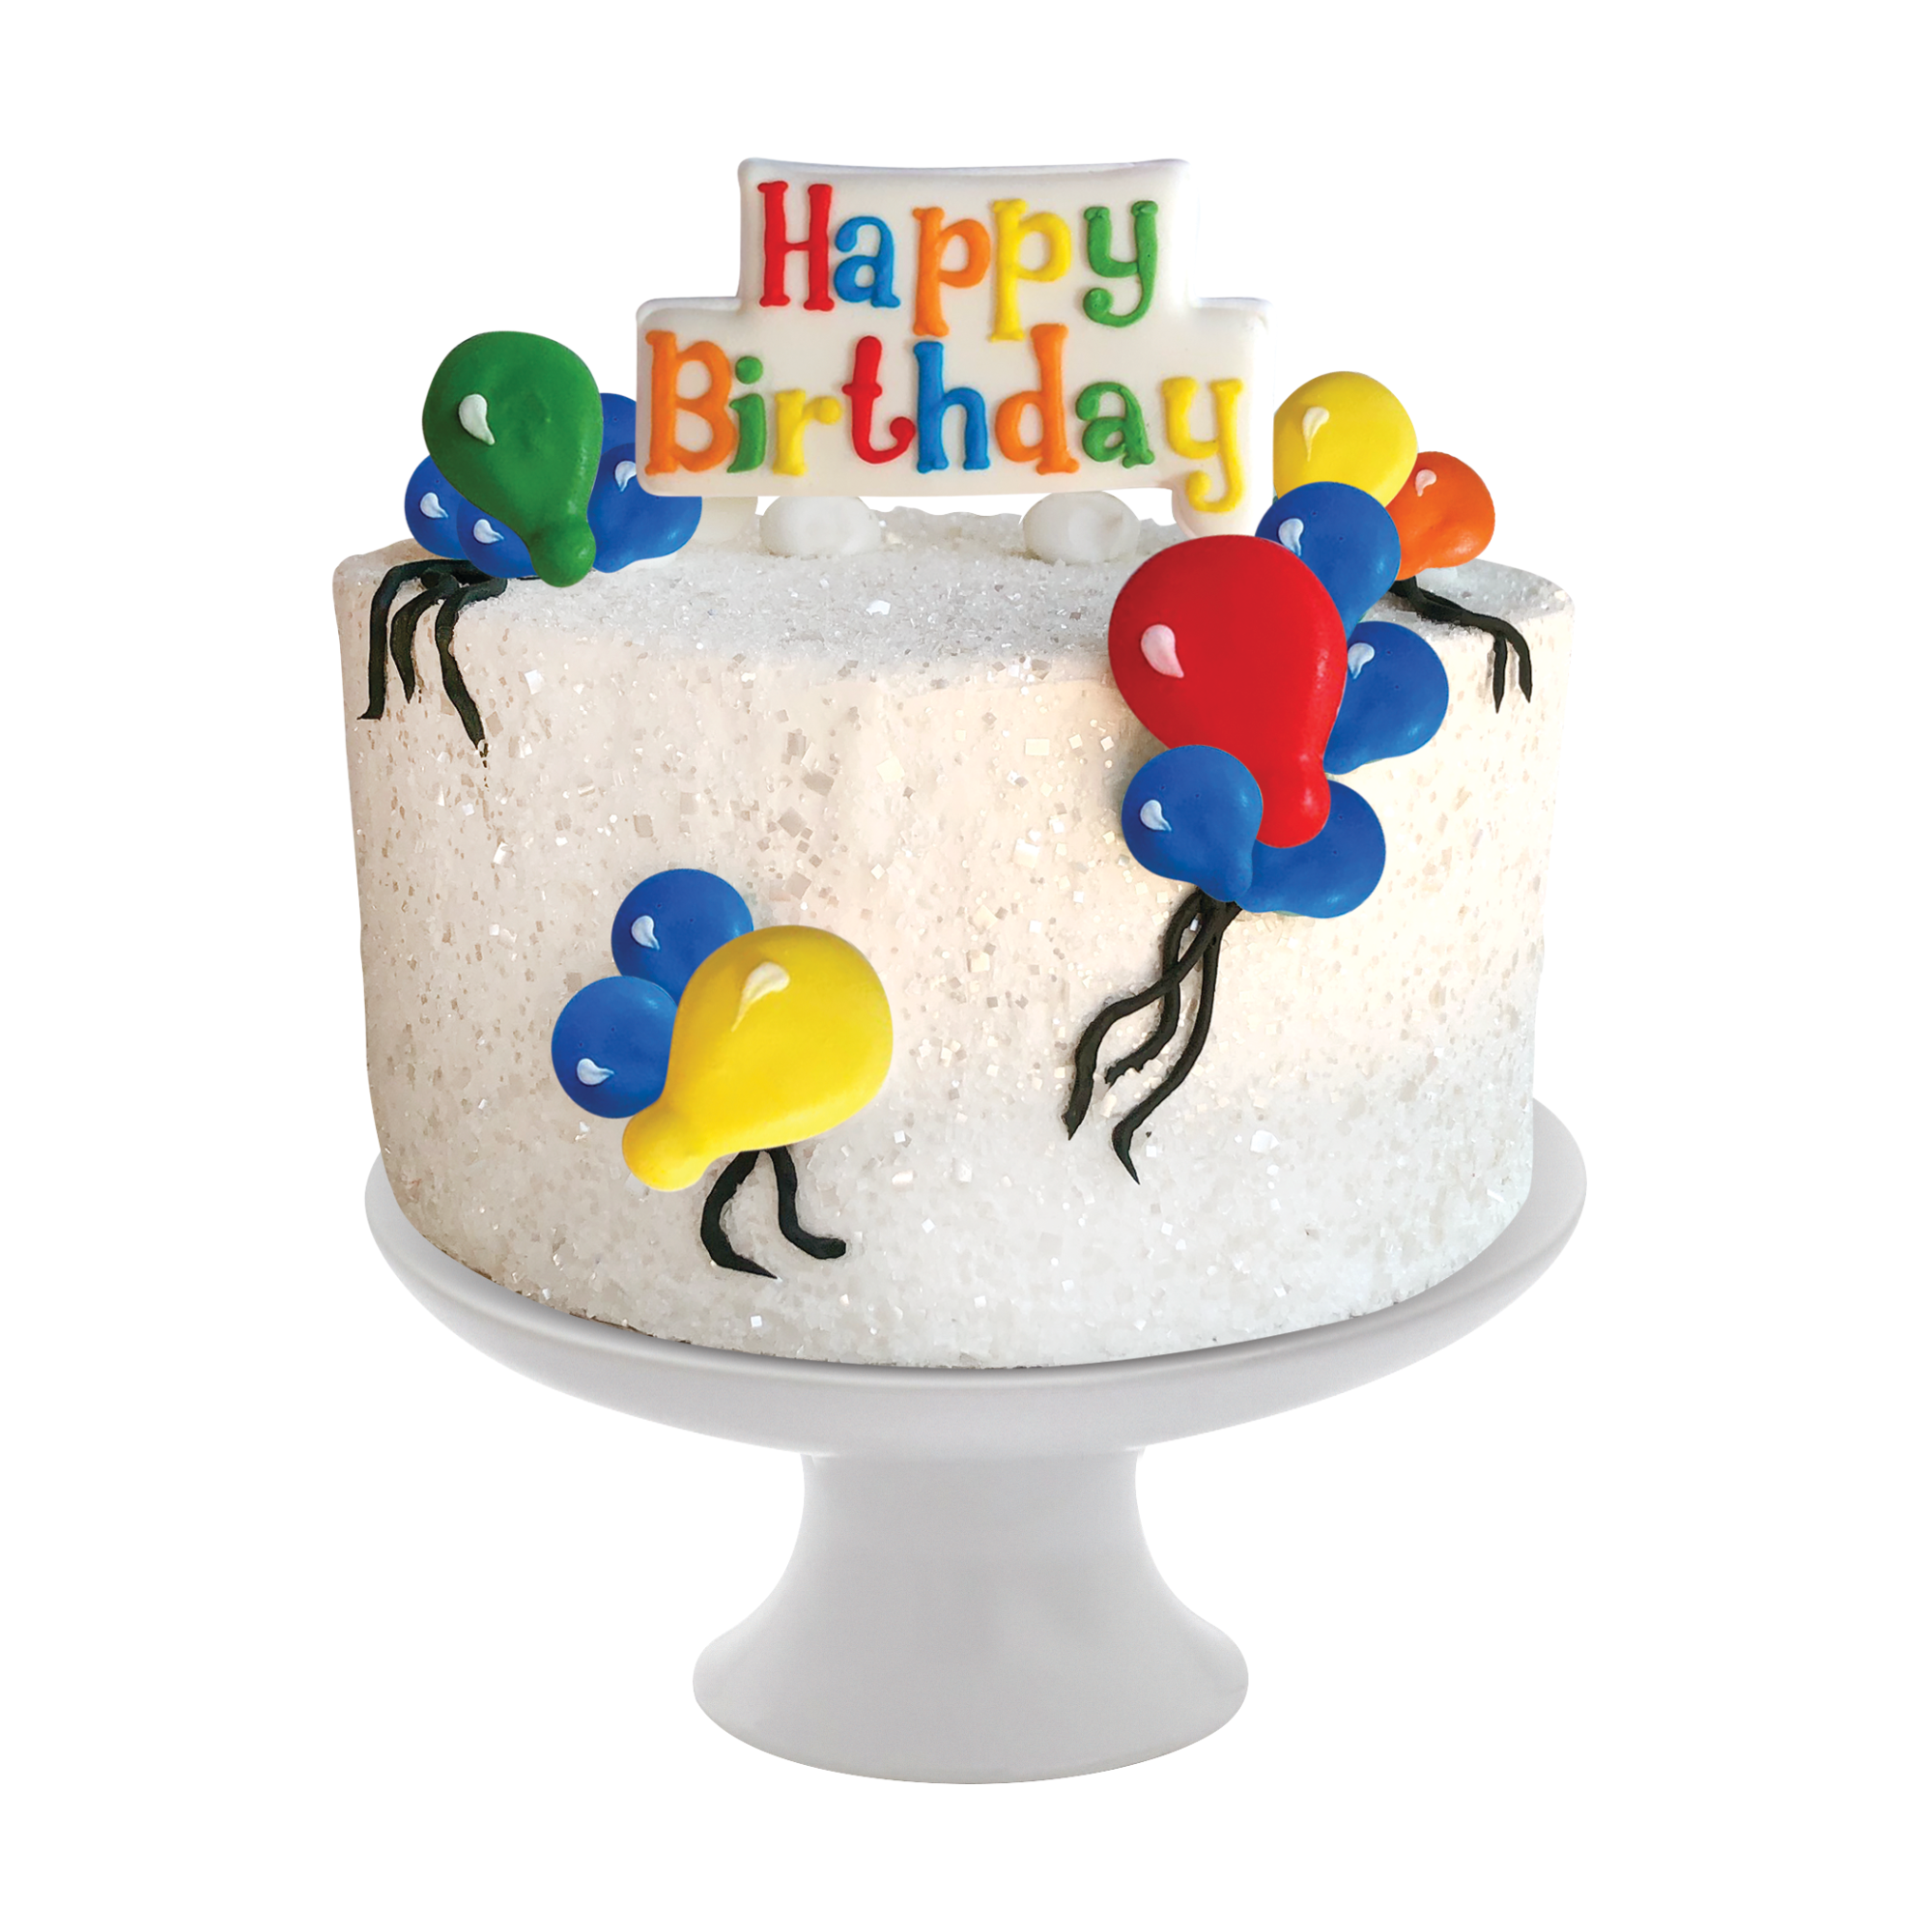 Happy Birthday Designer Cake Decor - Bulk (Case of 6)